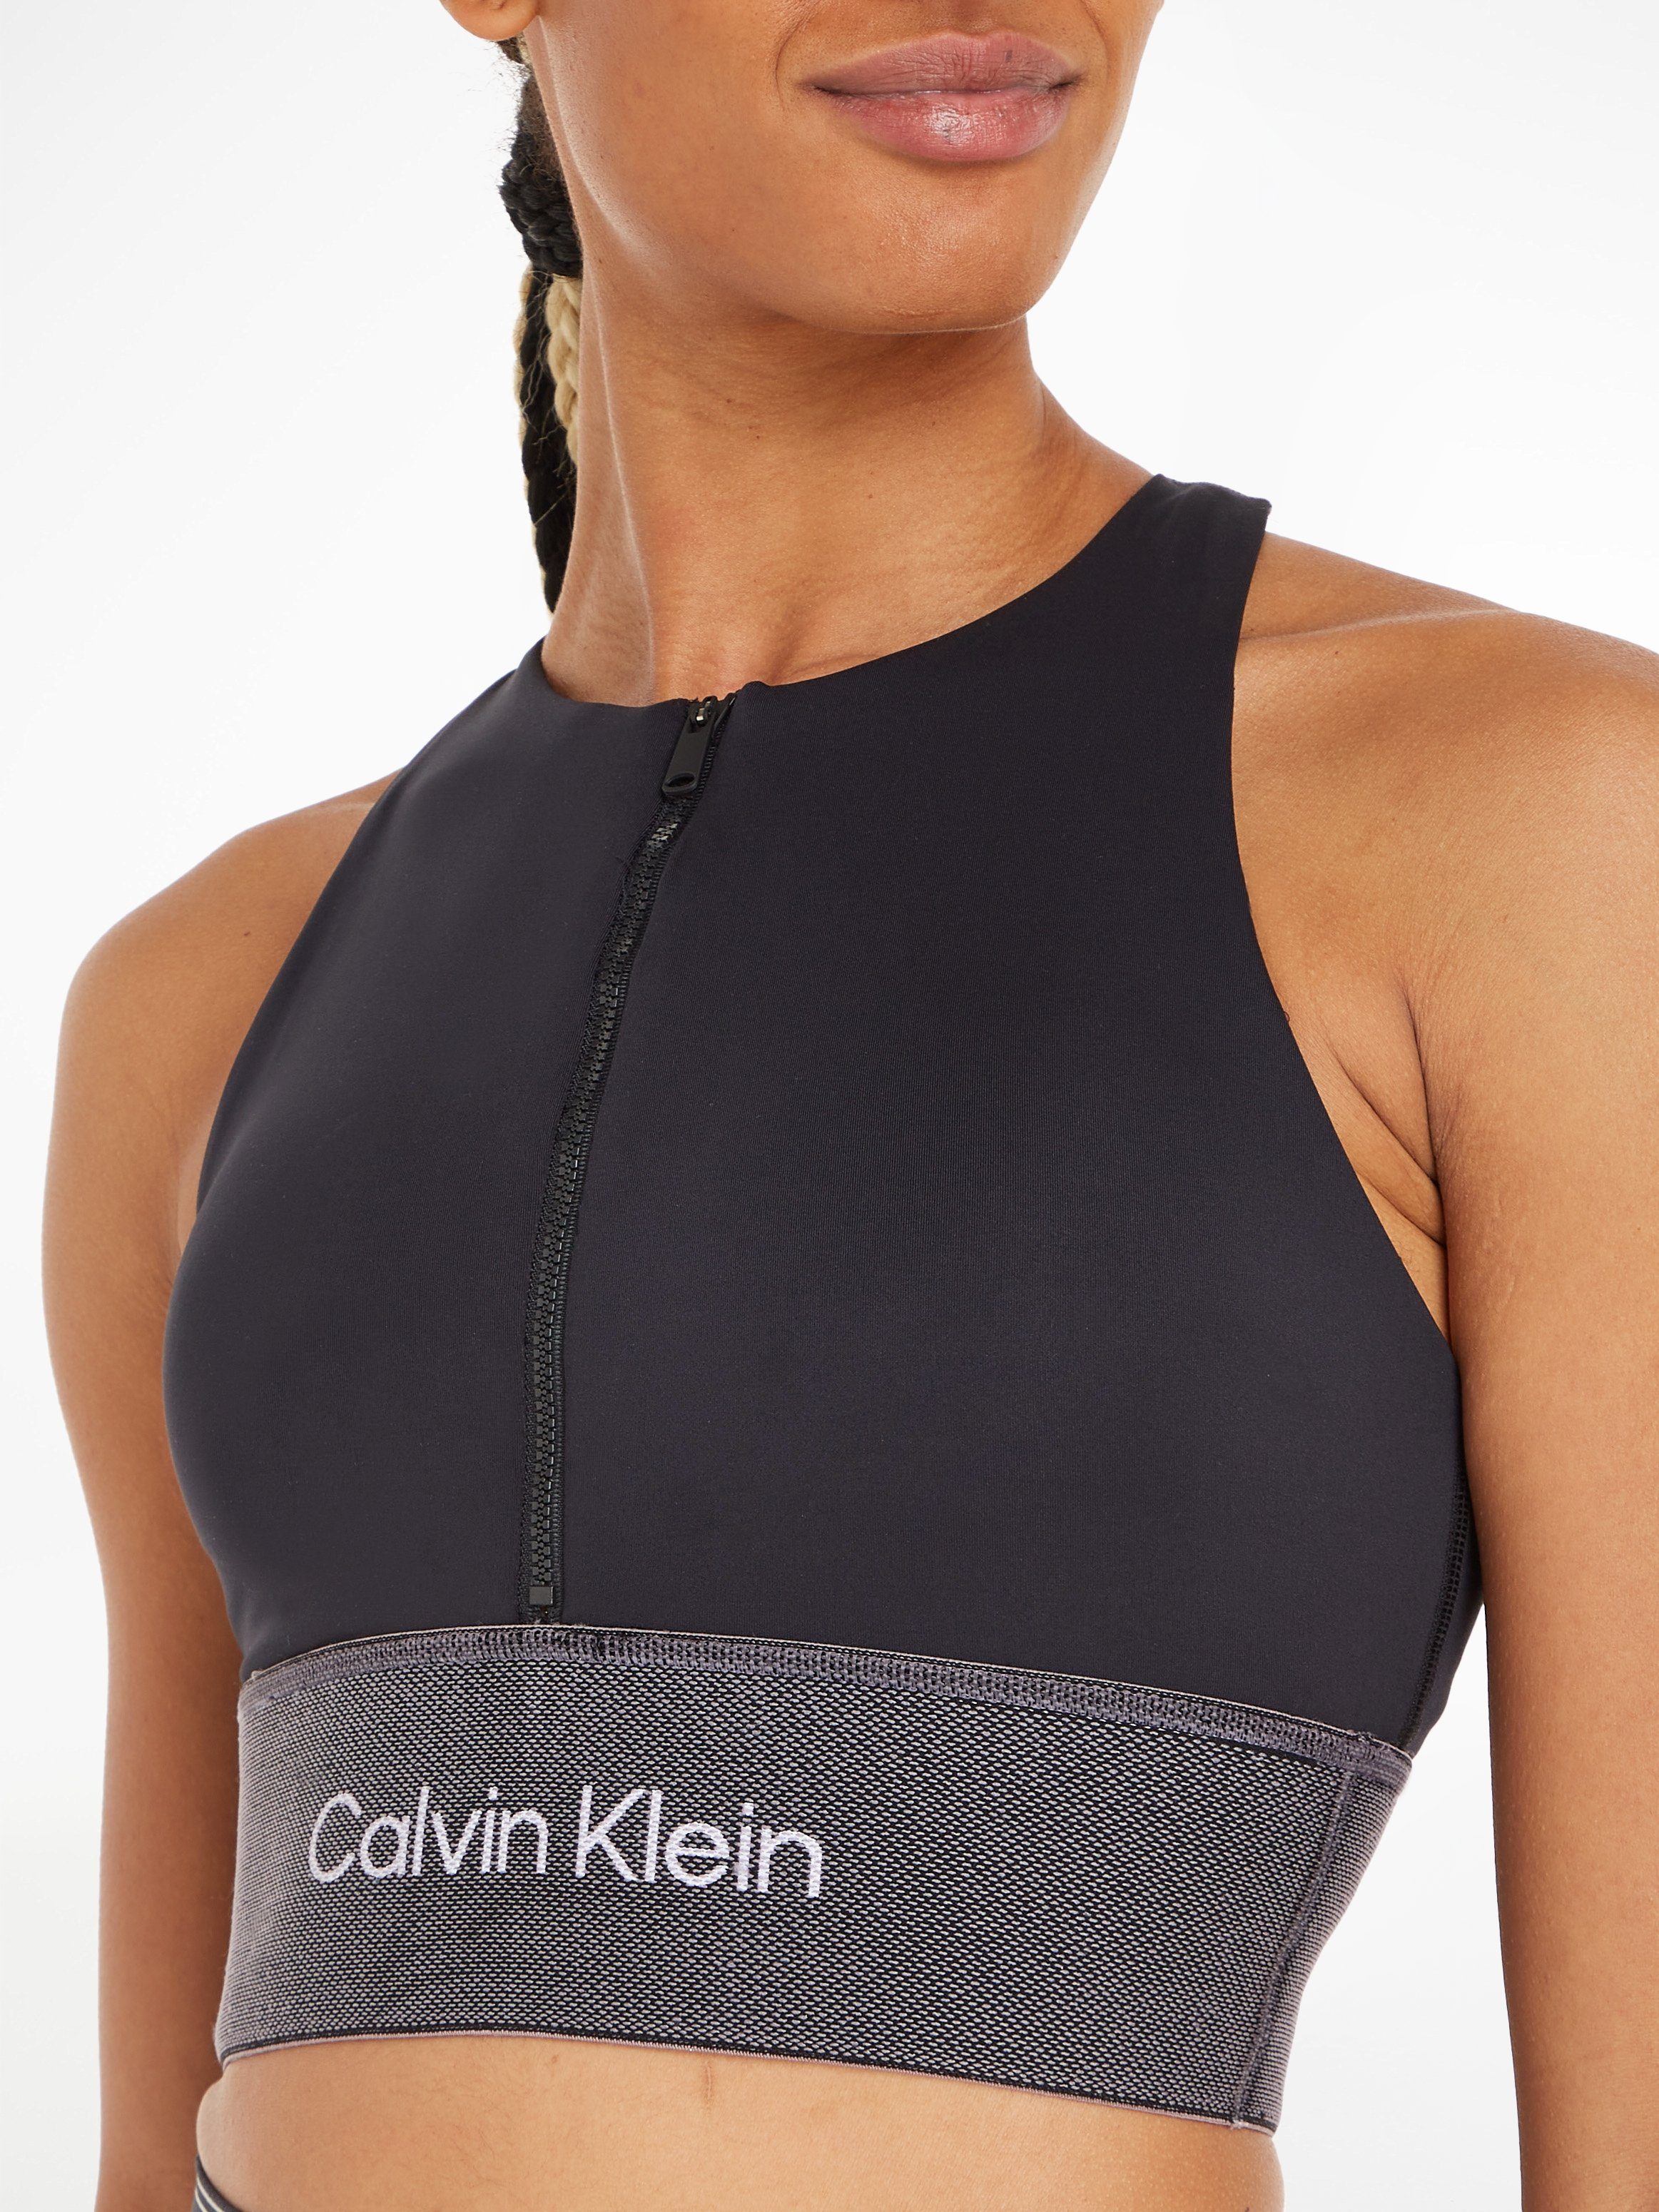 Calvin Klein Sport Sports Beauty Medium - Bra WO Sport-Bustier Support Black